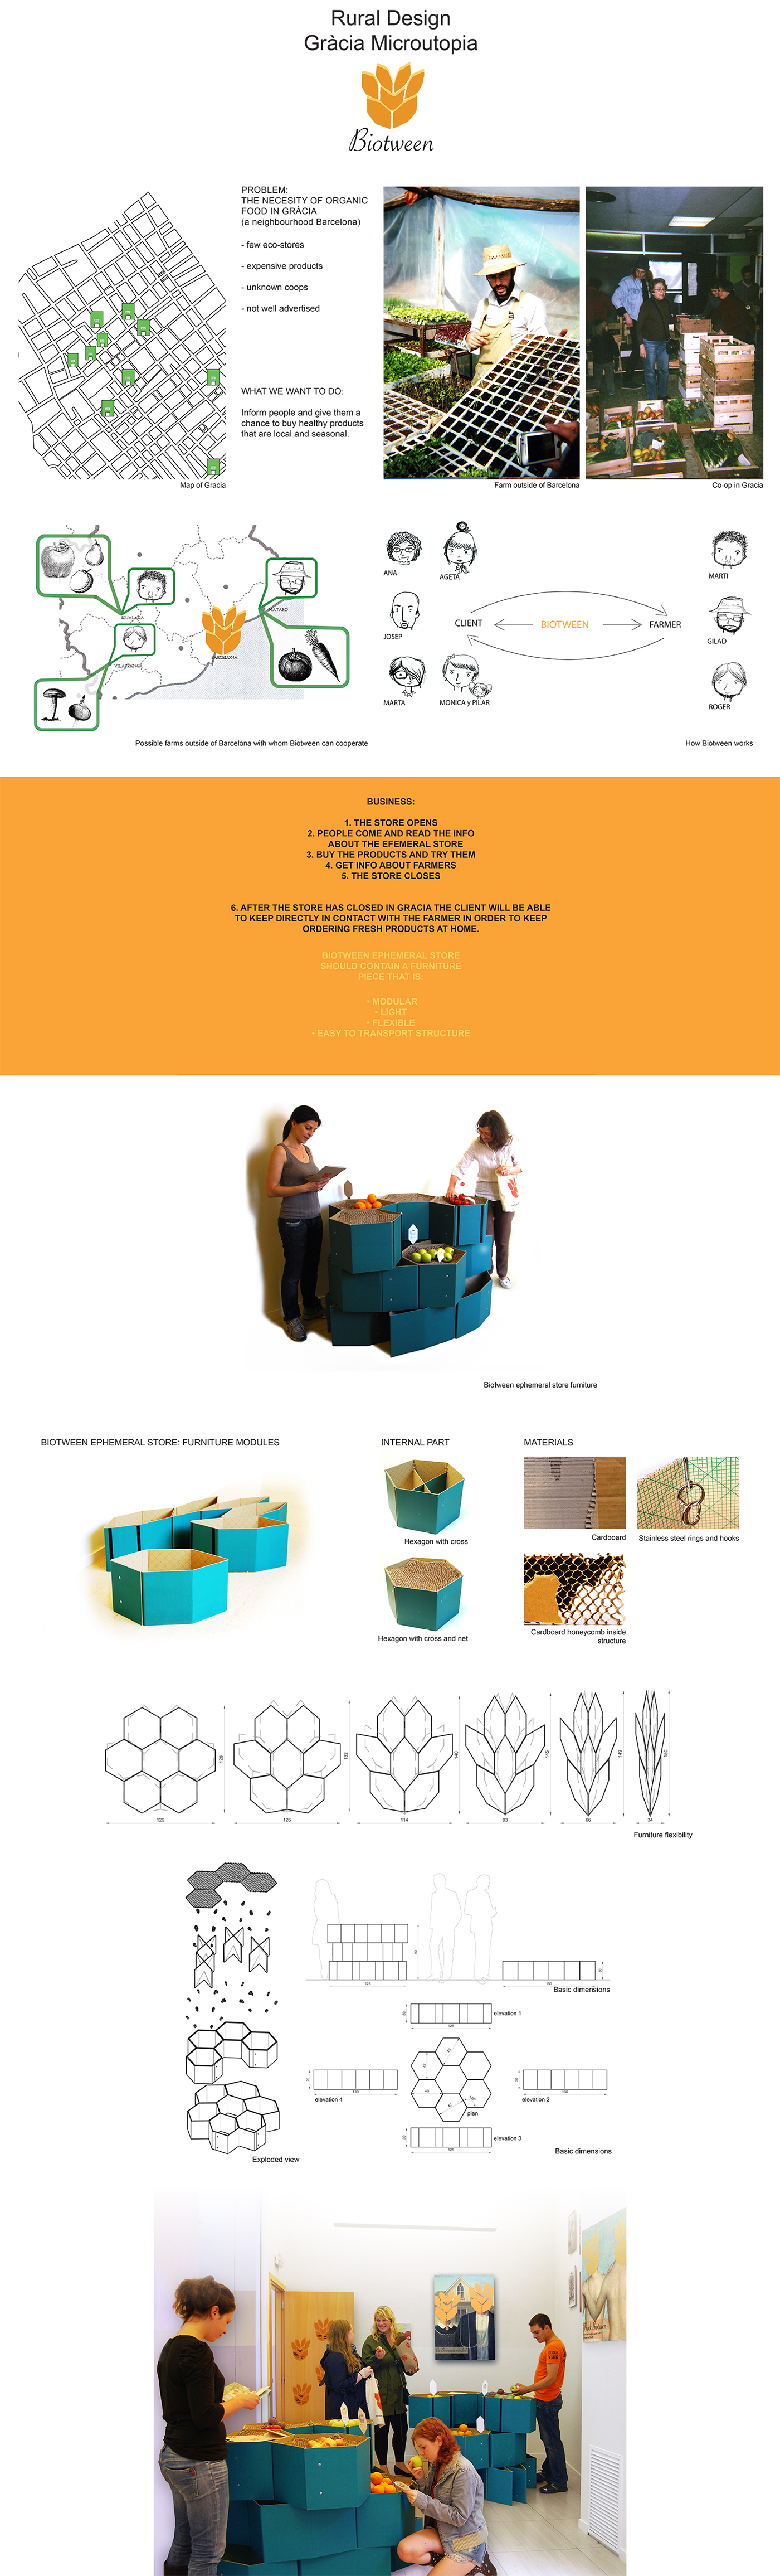 Ephemeral Co-Op cardboard modular furniture Easy to transport green eco friendly Rural Design